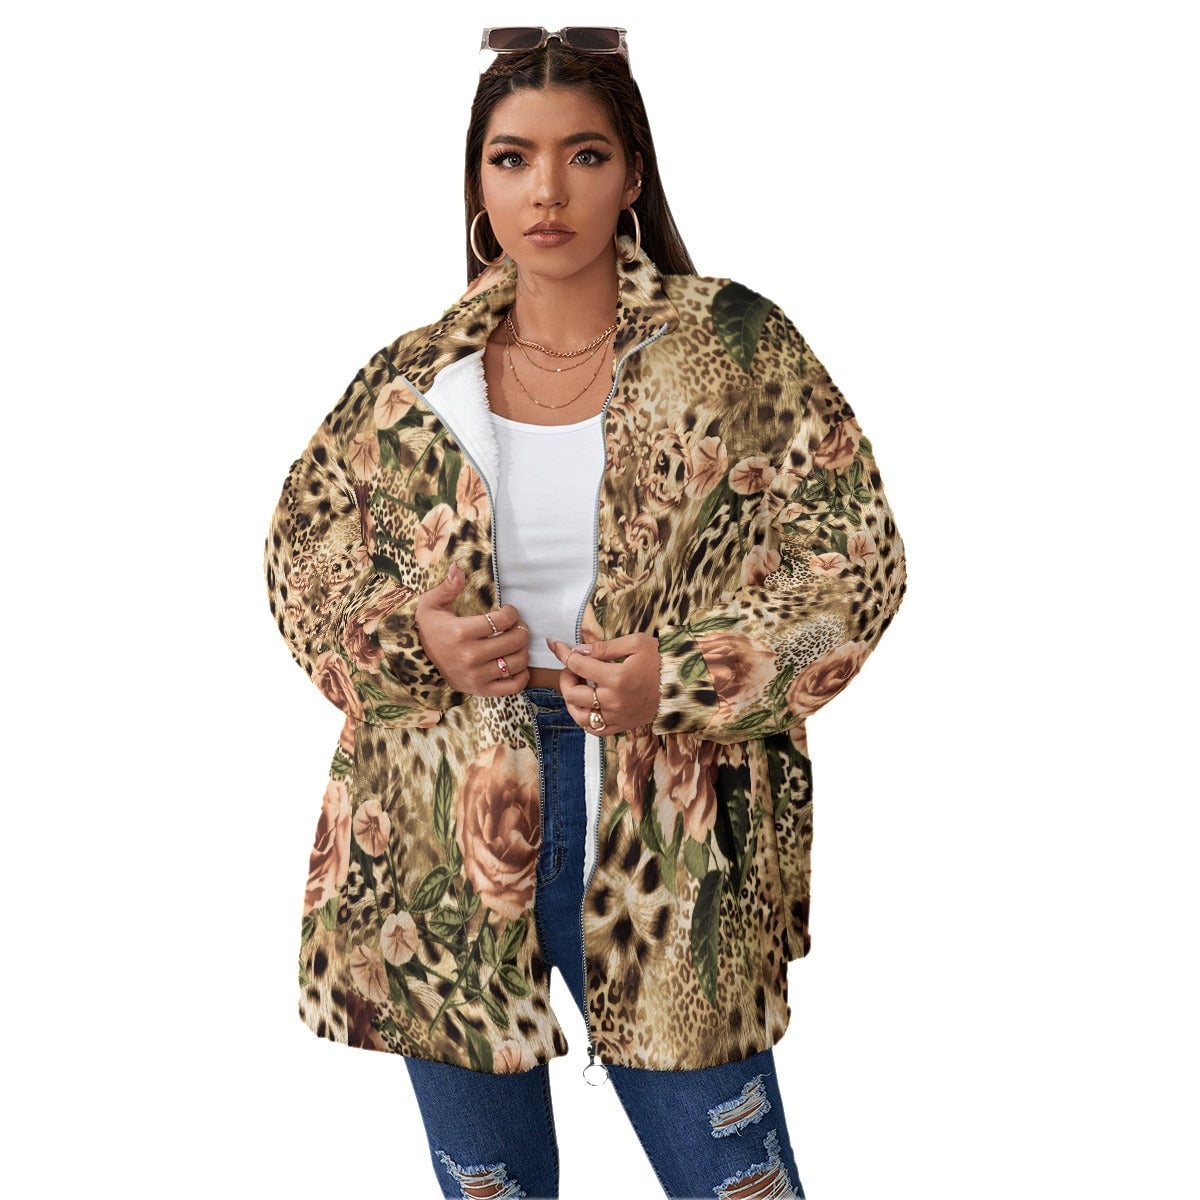 Fashion Roses and Leopard Women’s Borg Fleece Oversize Jacket